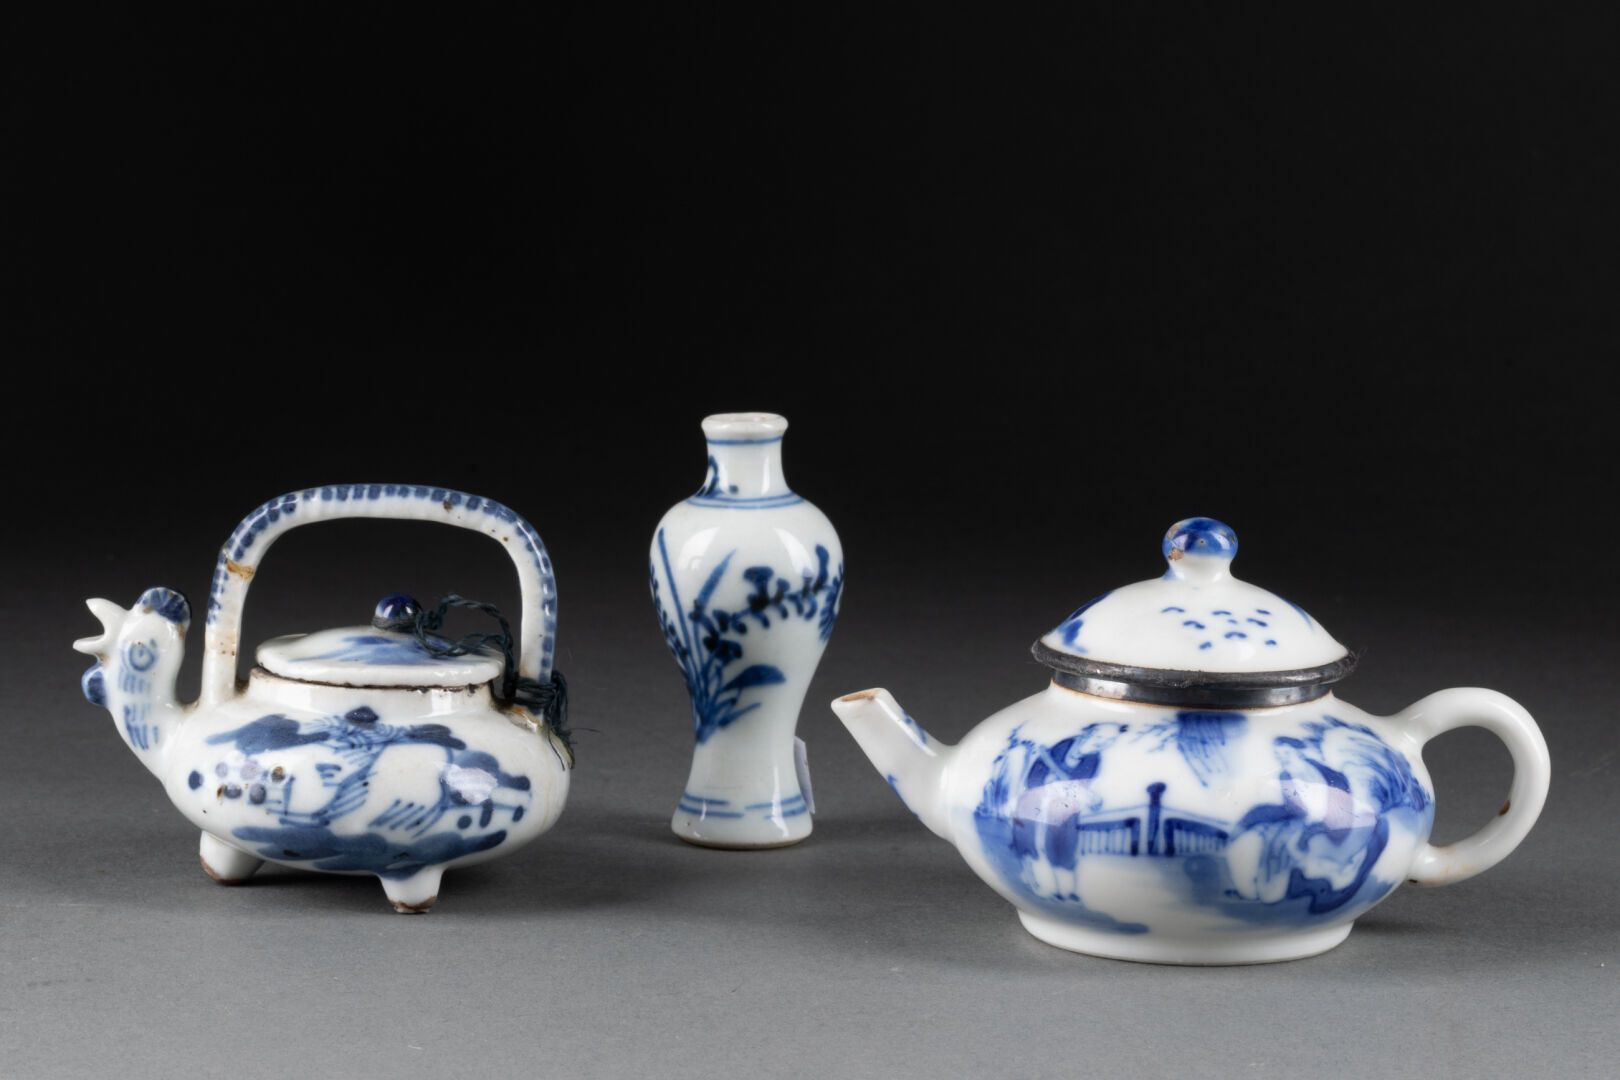 CHINE et VIETNAM - XIXe siècle 拍卖会包括两个微型茶壶和一个微型巴斯特花瓶 
瓷器和蓝色釉下彩 
最大高度6.5厘米 
一个有重新&hellip;